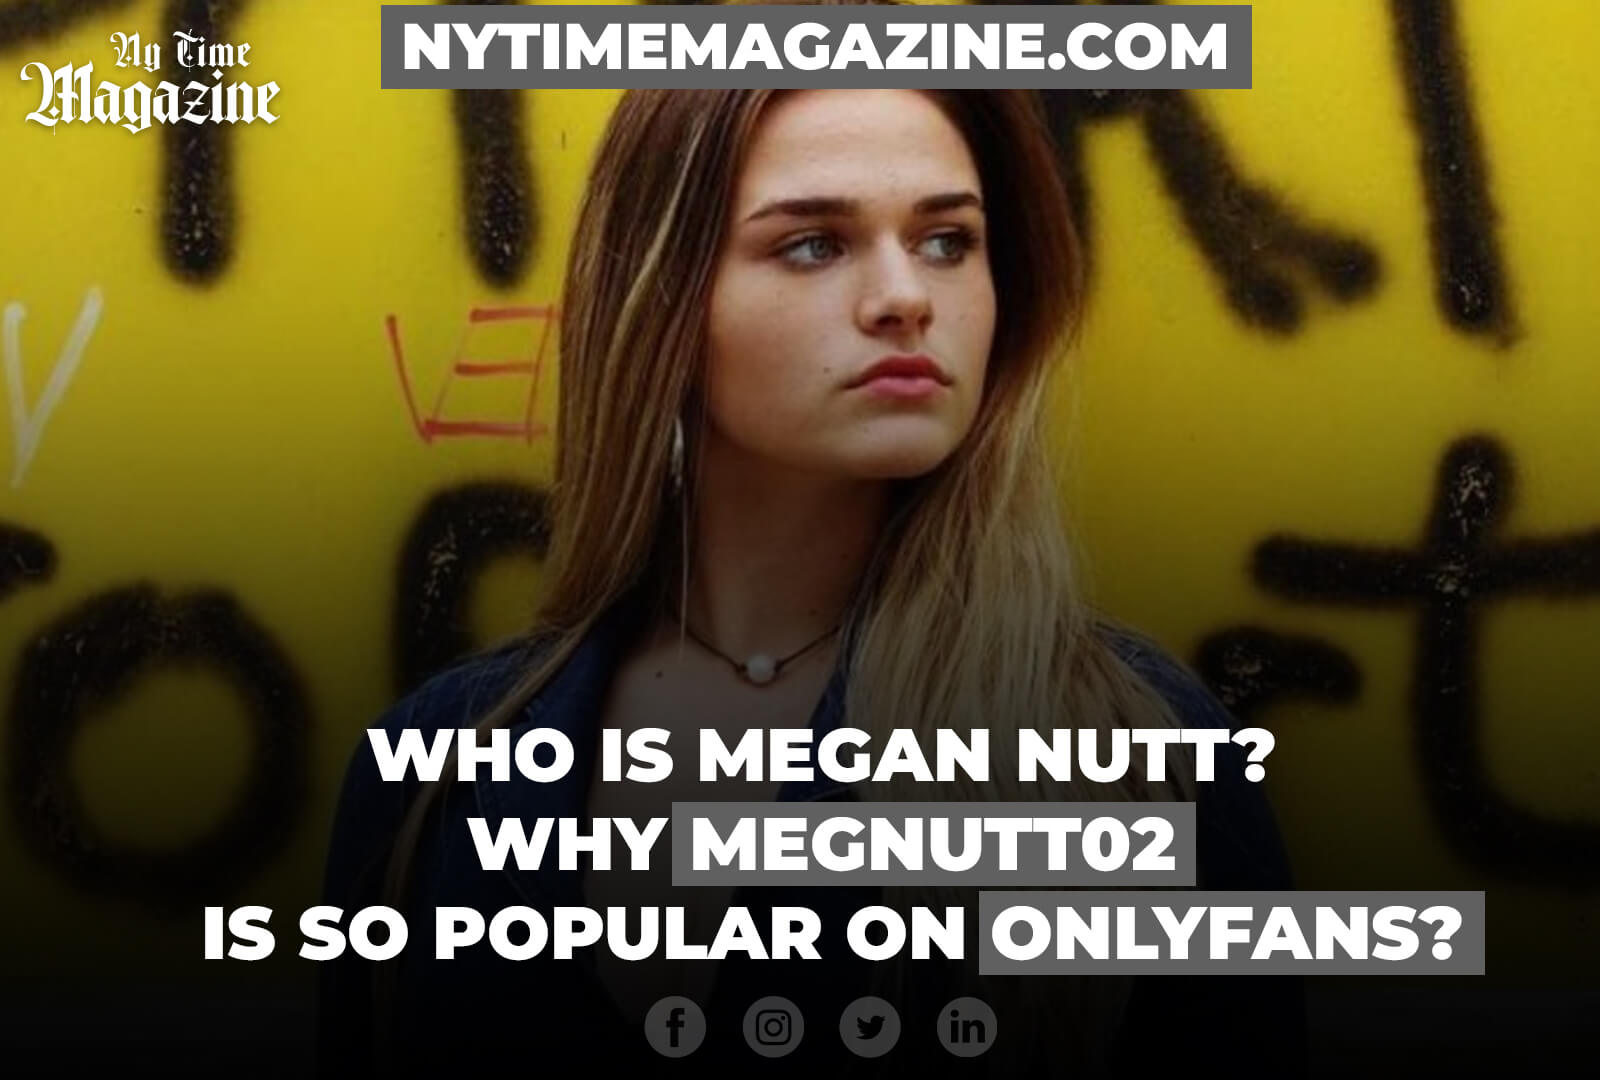 WHO IS MEGAN NUTT? WHY MEGNUTT02 IS SO POPULAR ON ONLYFANS?